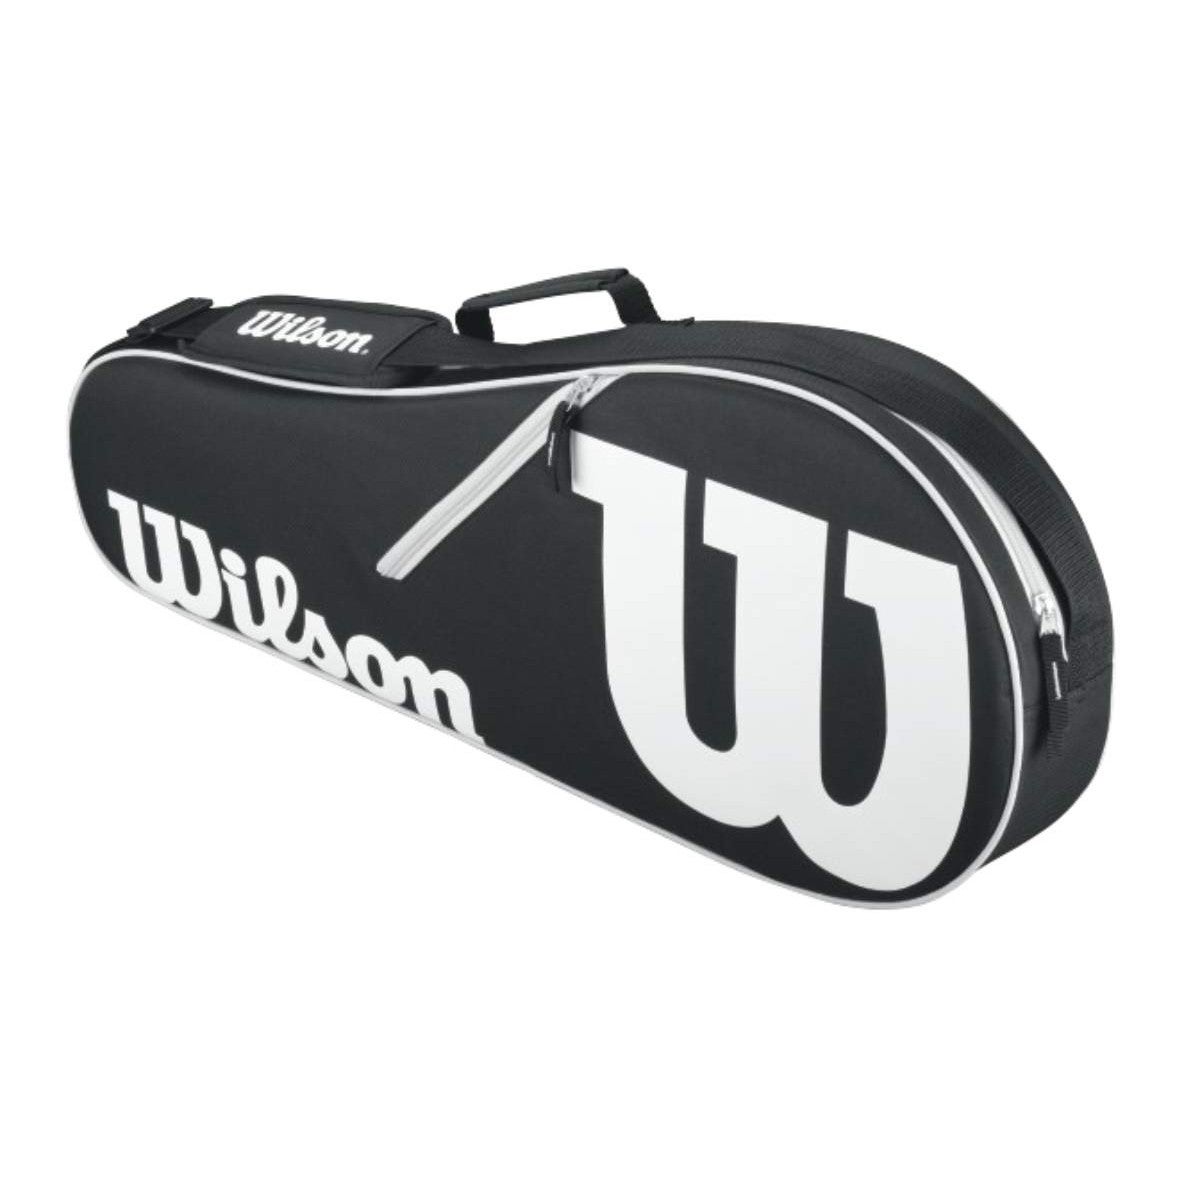  Wilson Advantage Tennis Bag